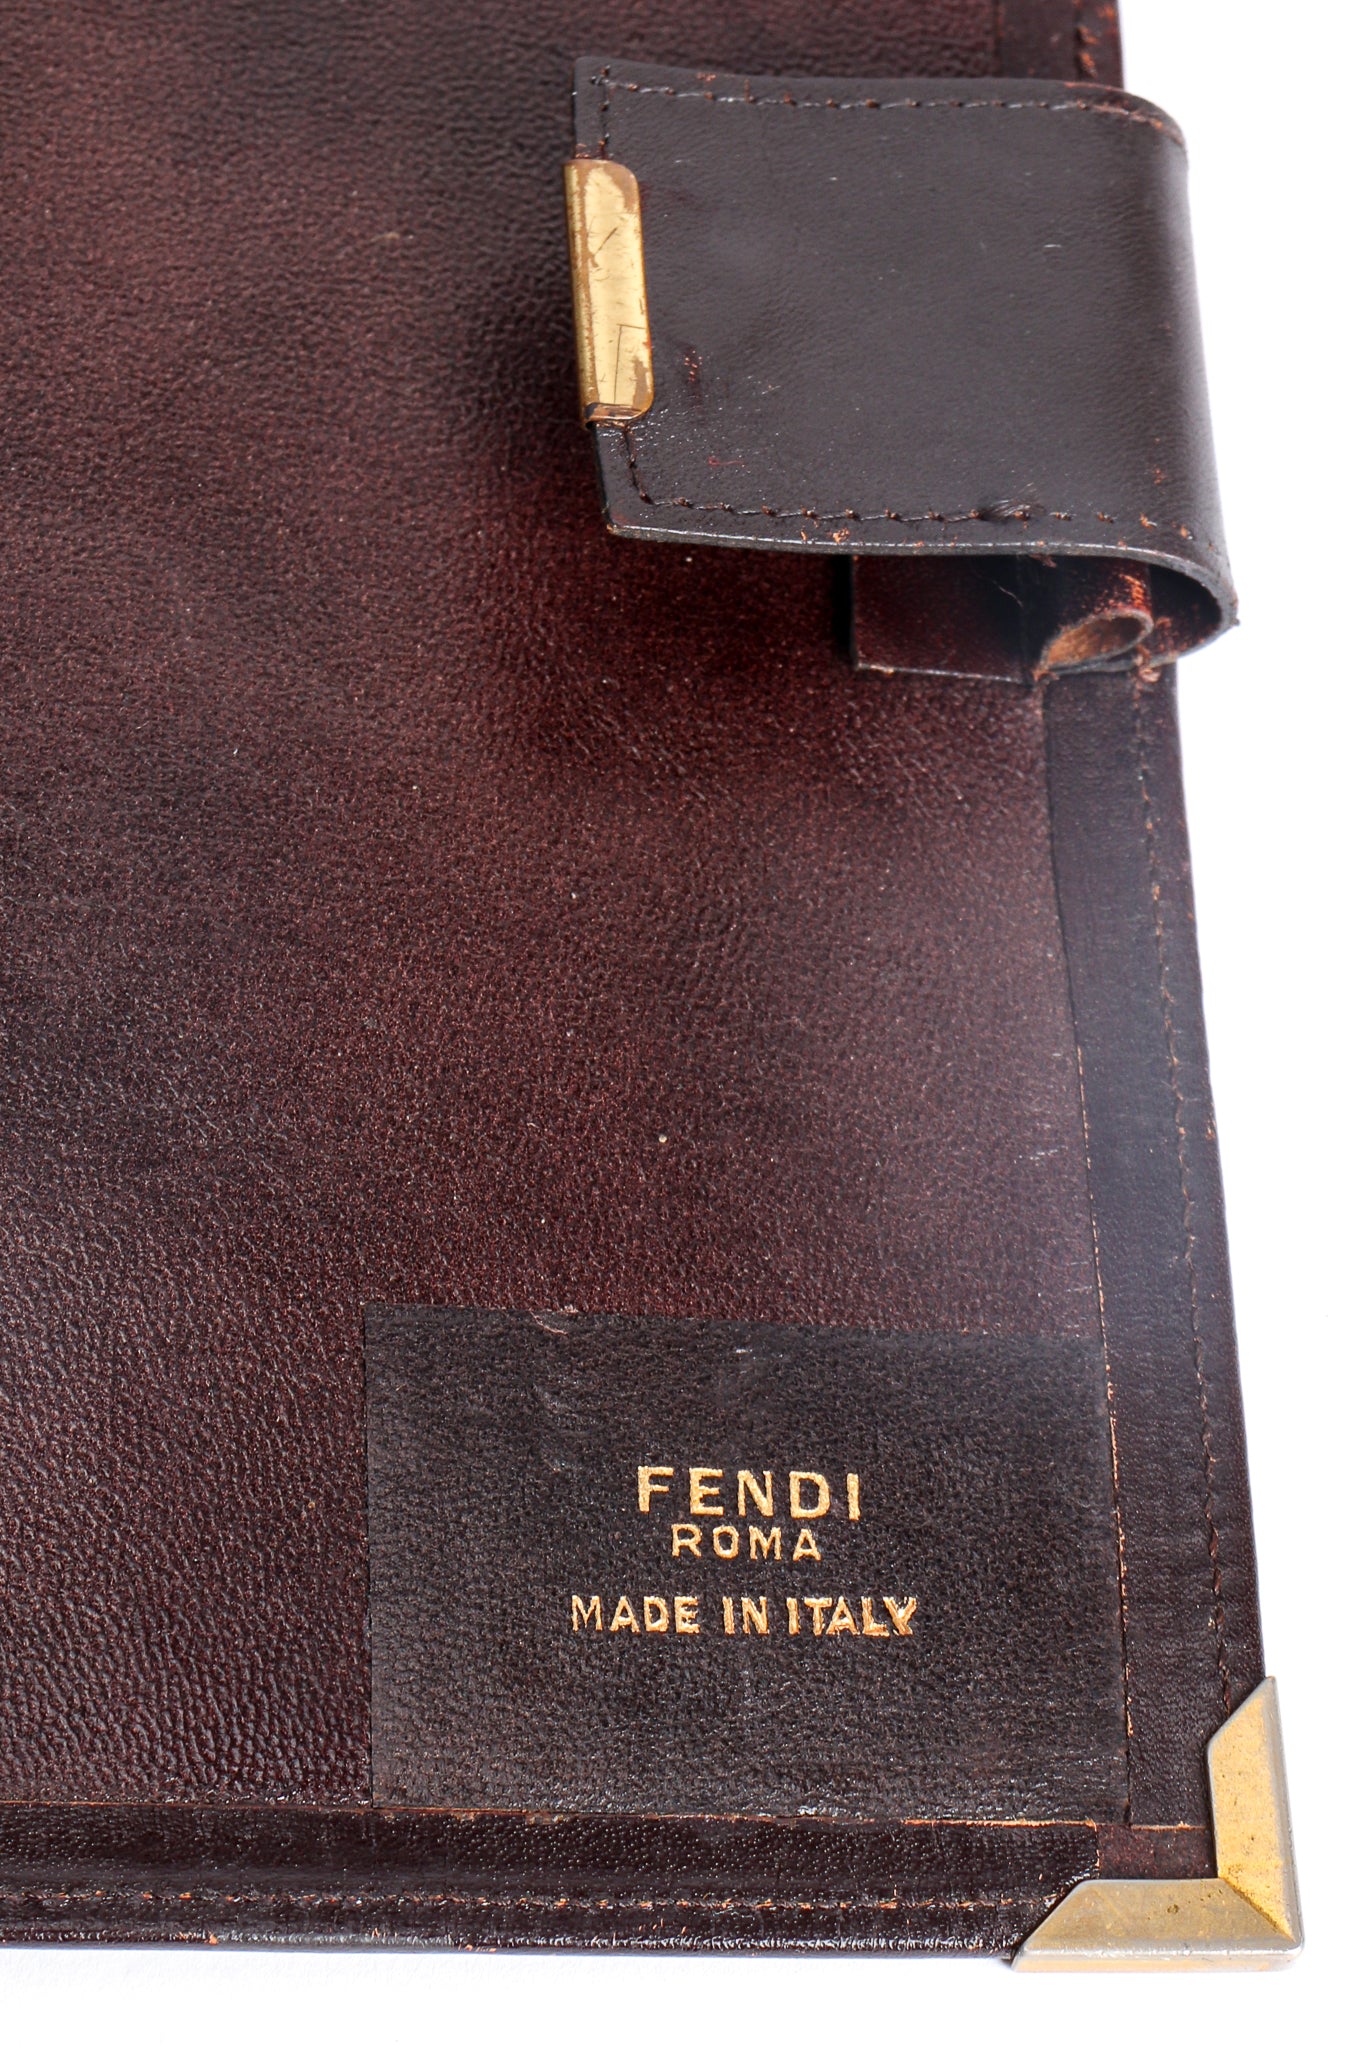 Vintage Fendi Roma Zucca Shoulder Bag from Italy - Ruby Lane